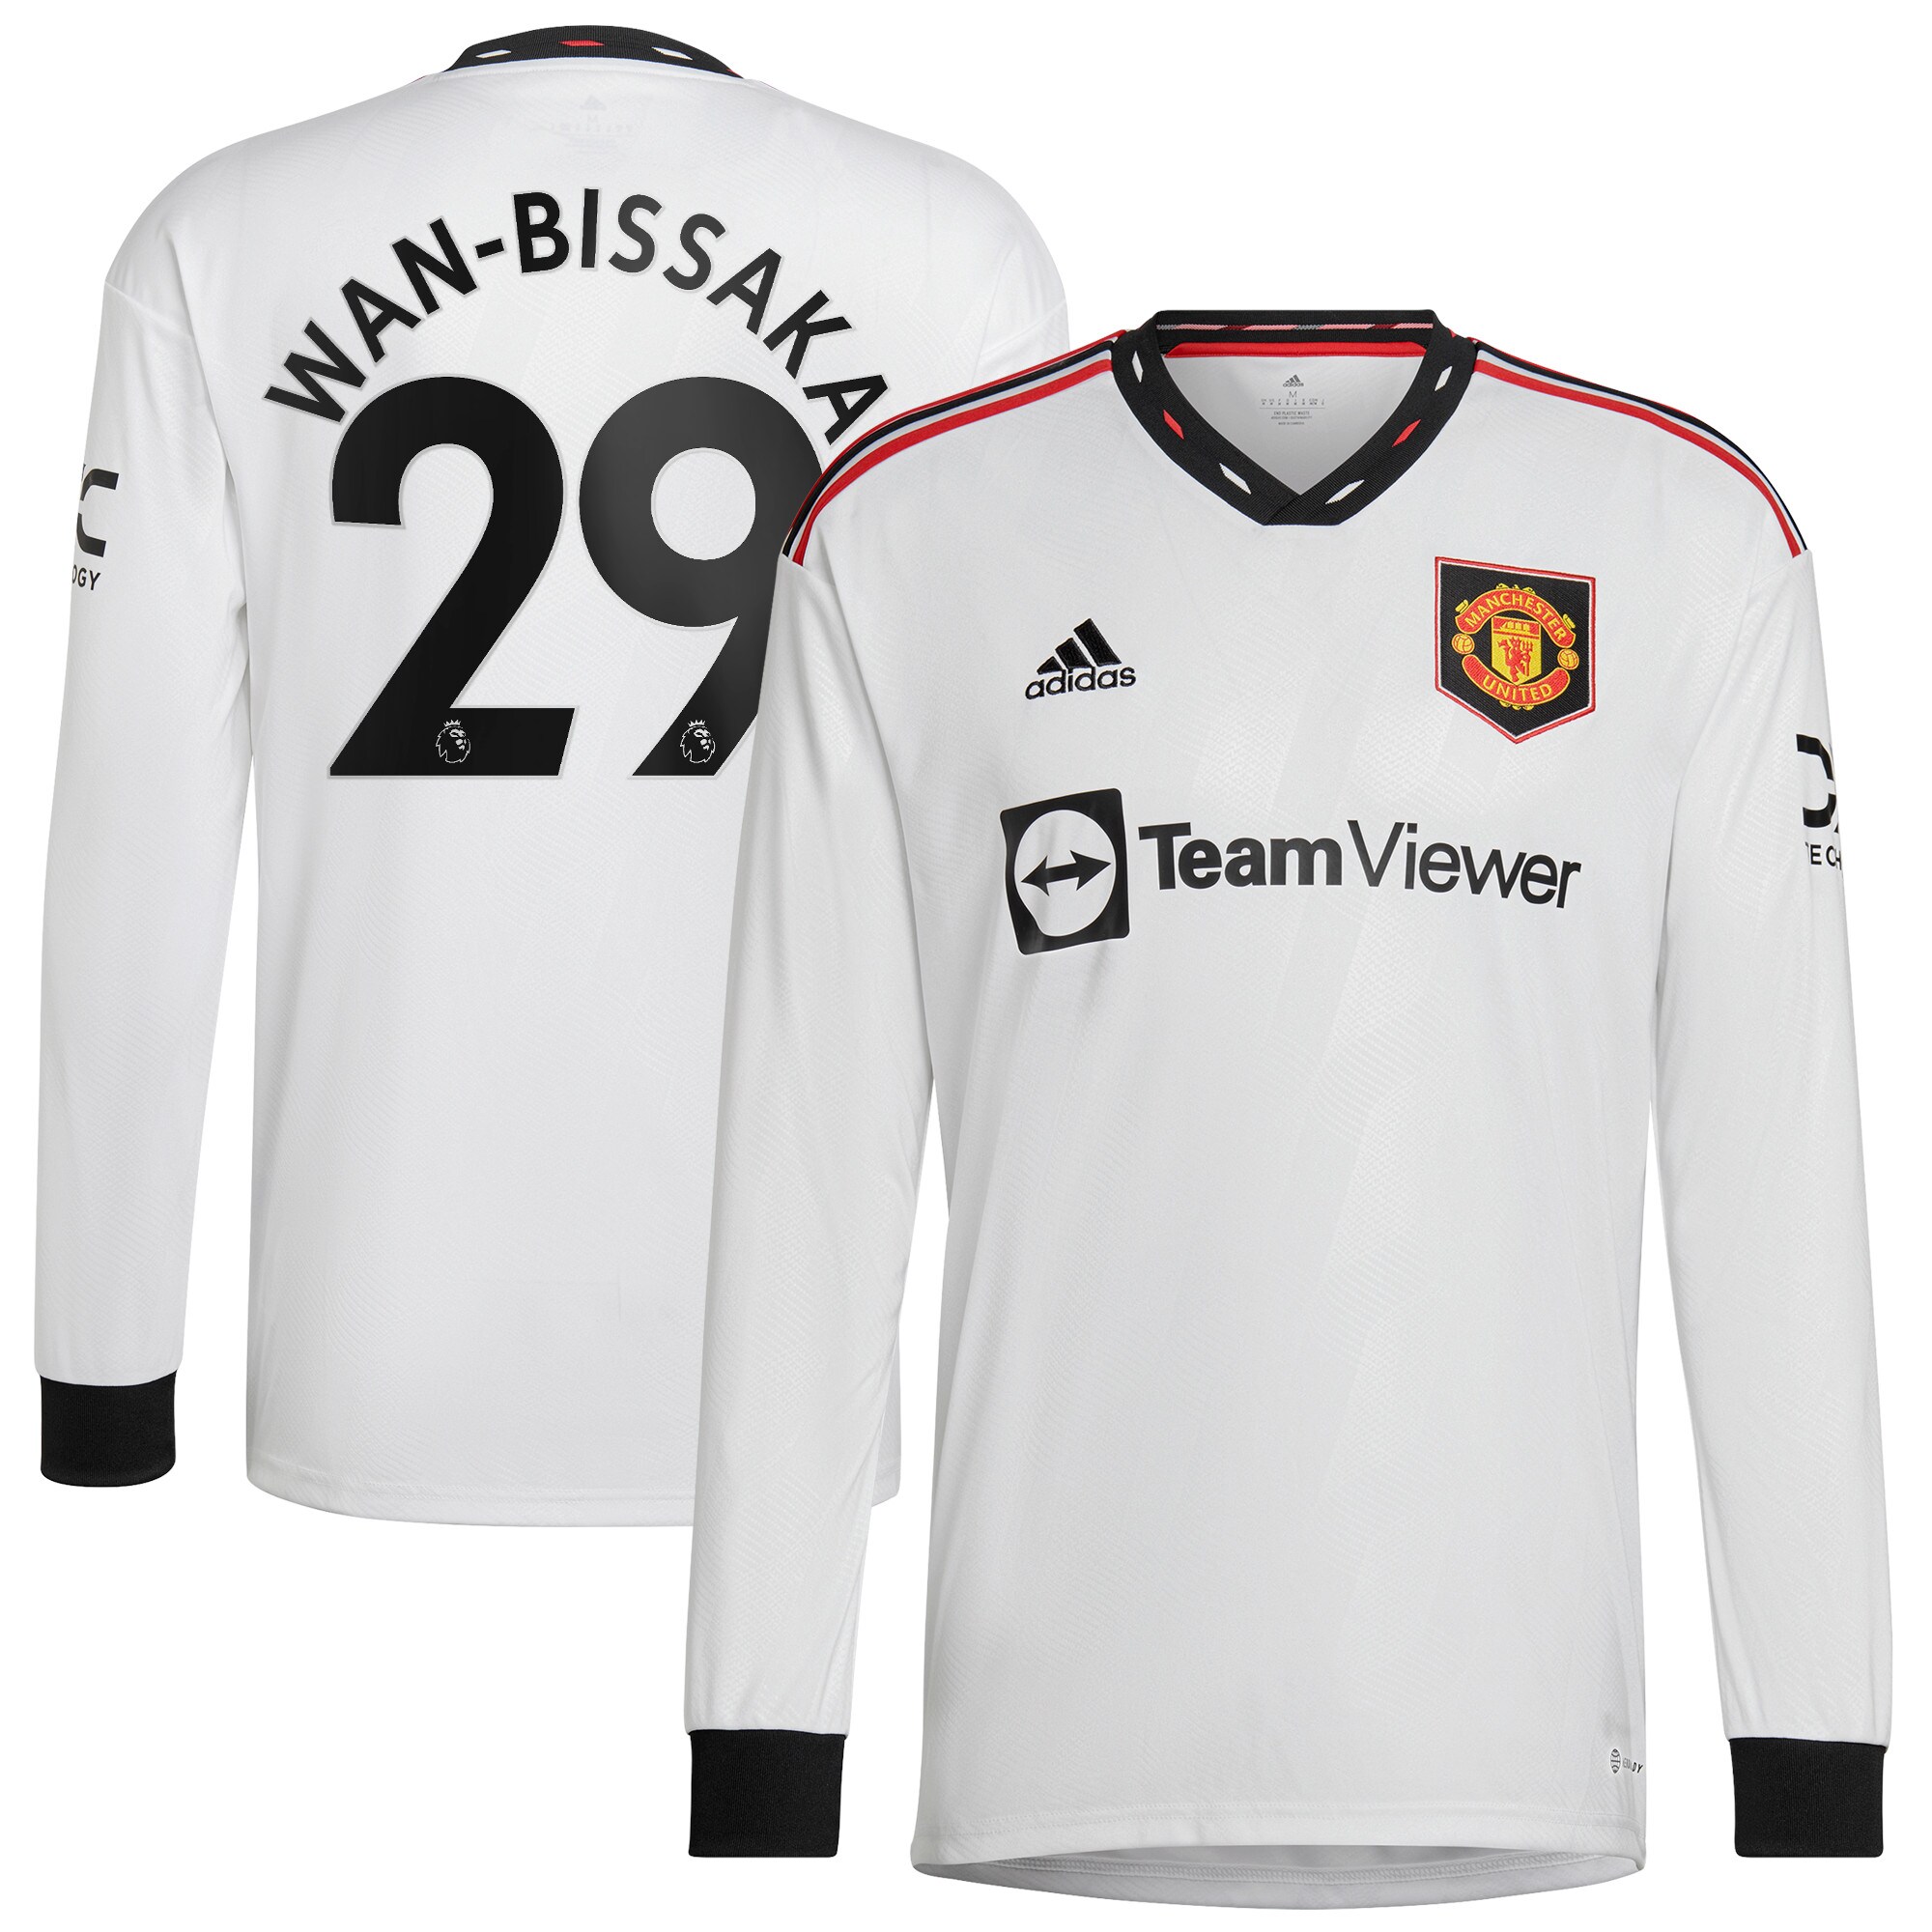 Manchester United Away Shirt 2022-23 - Long Sleeve with Wan-Bissaka 29 printing